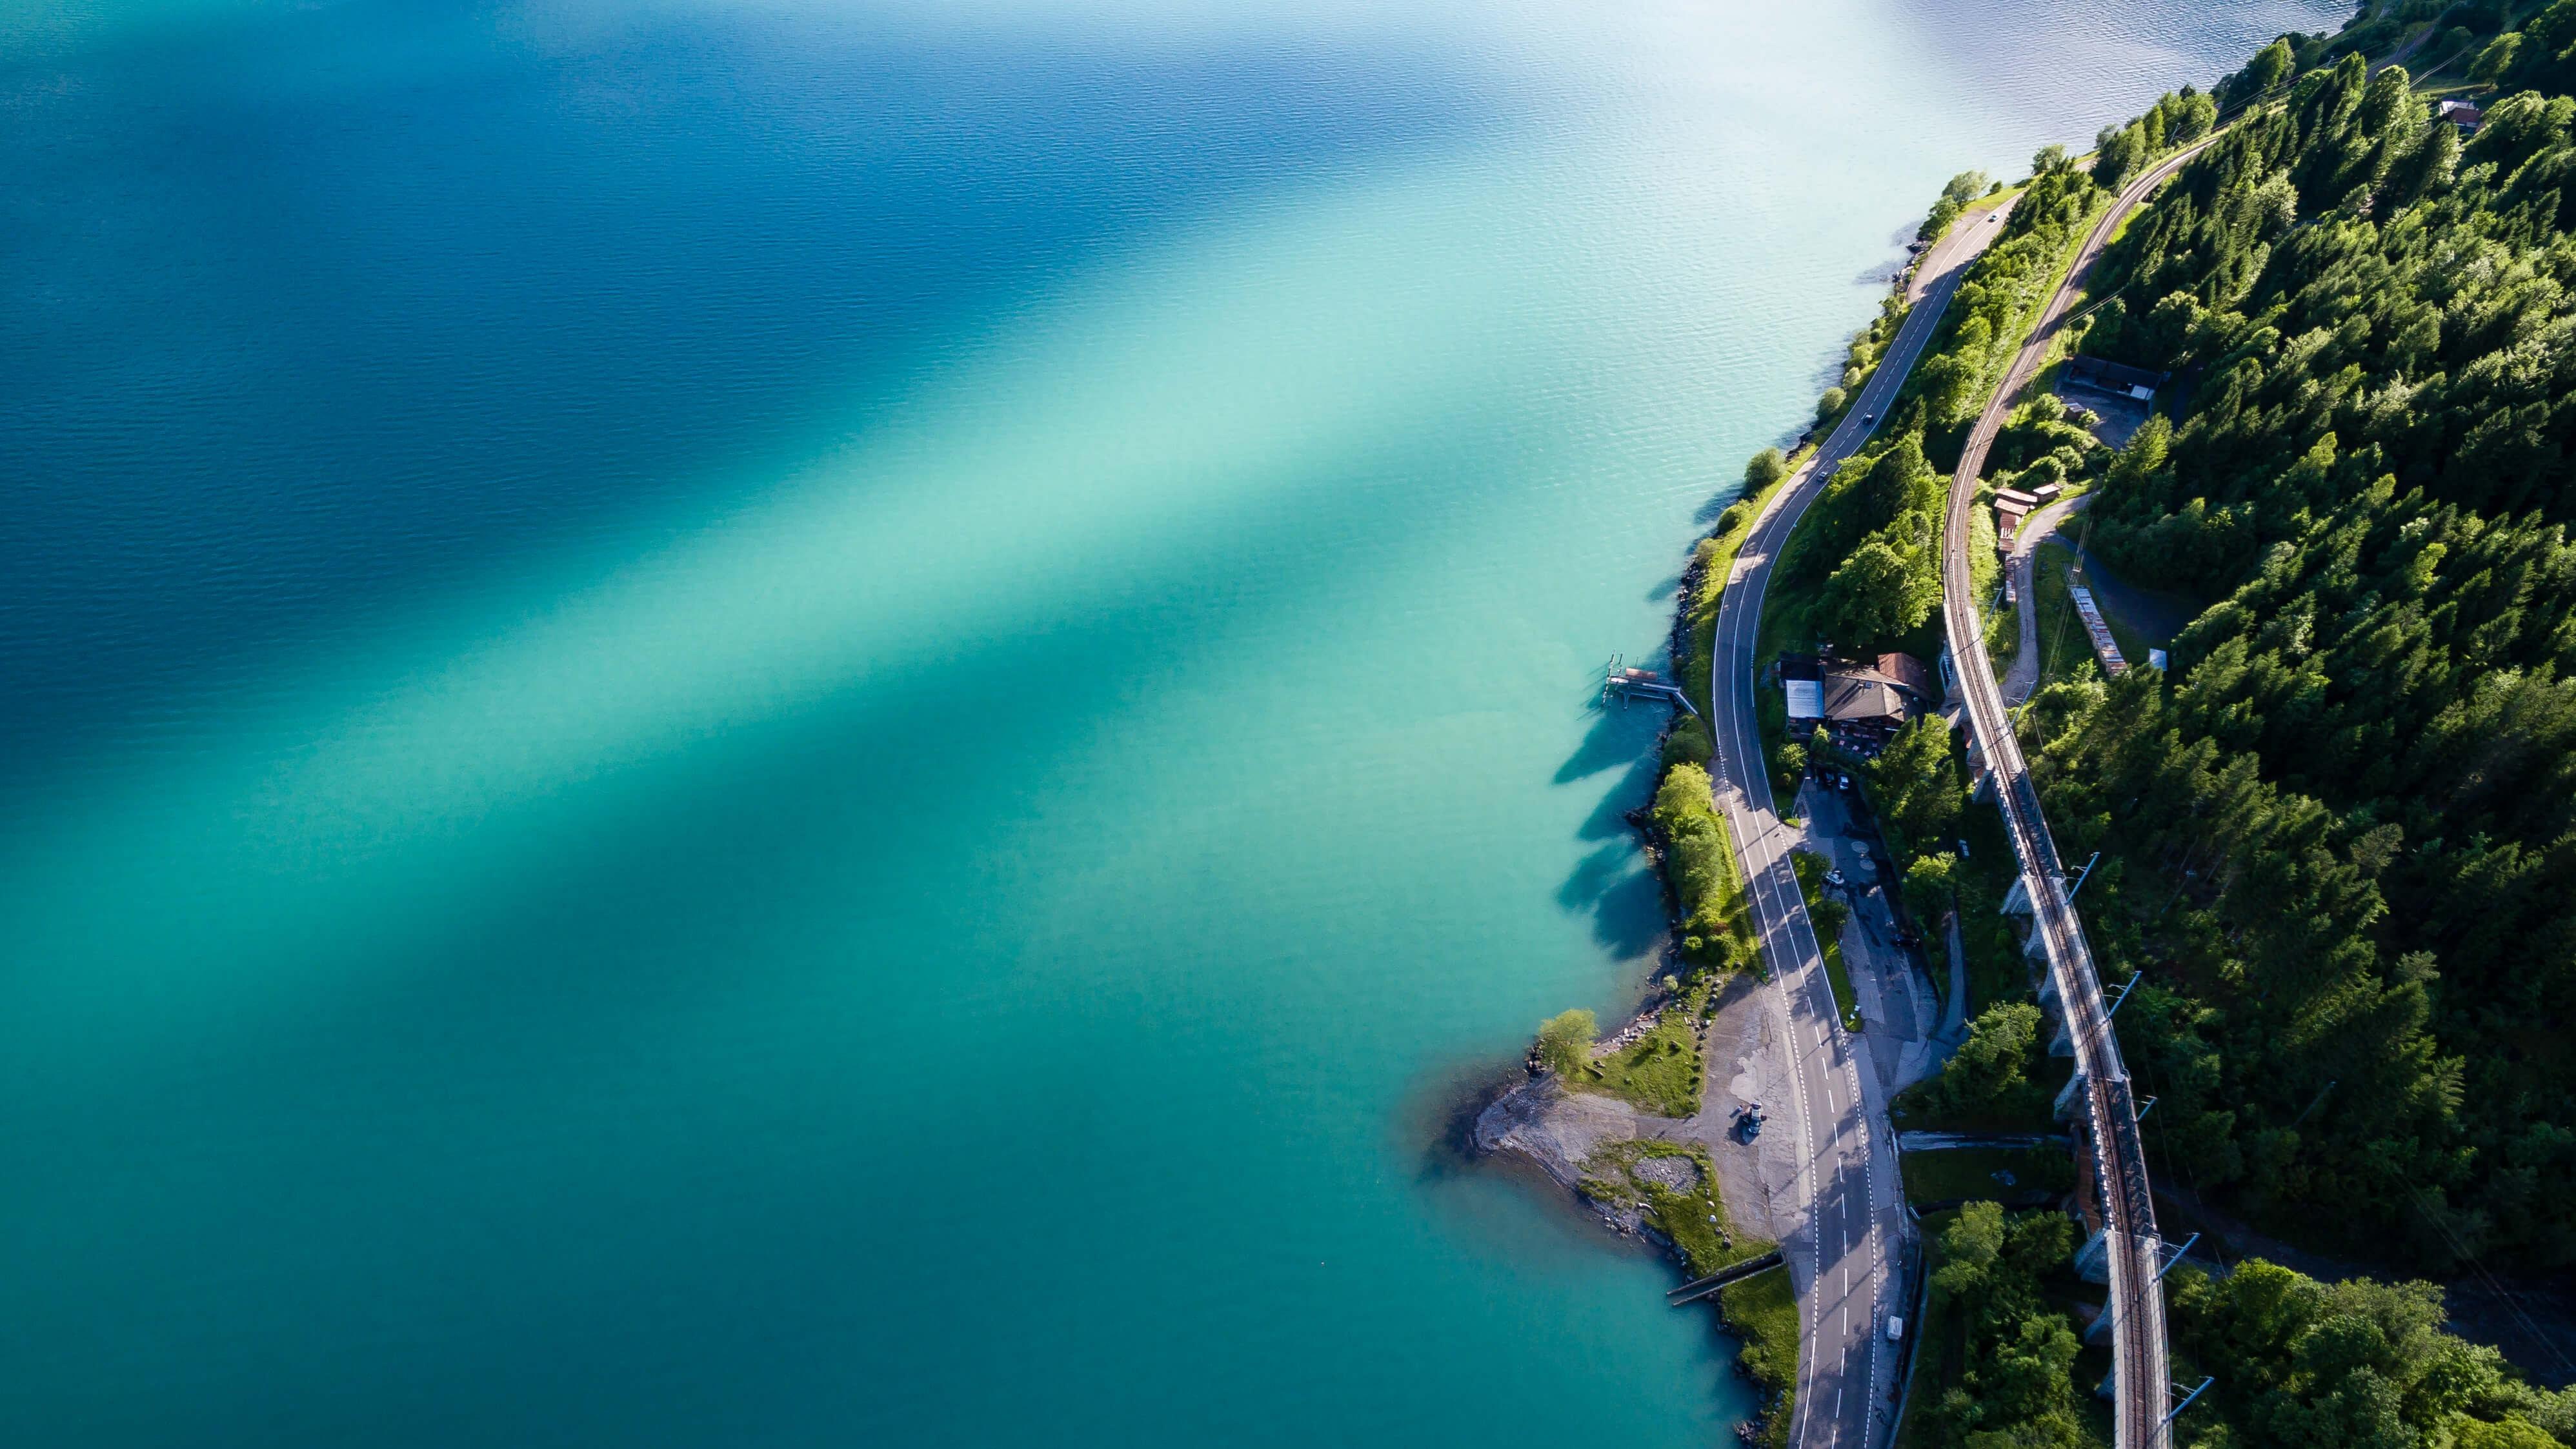 Lake Brienz, Switzerland Picture. Download Free Image